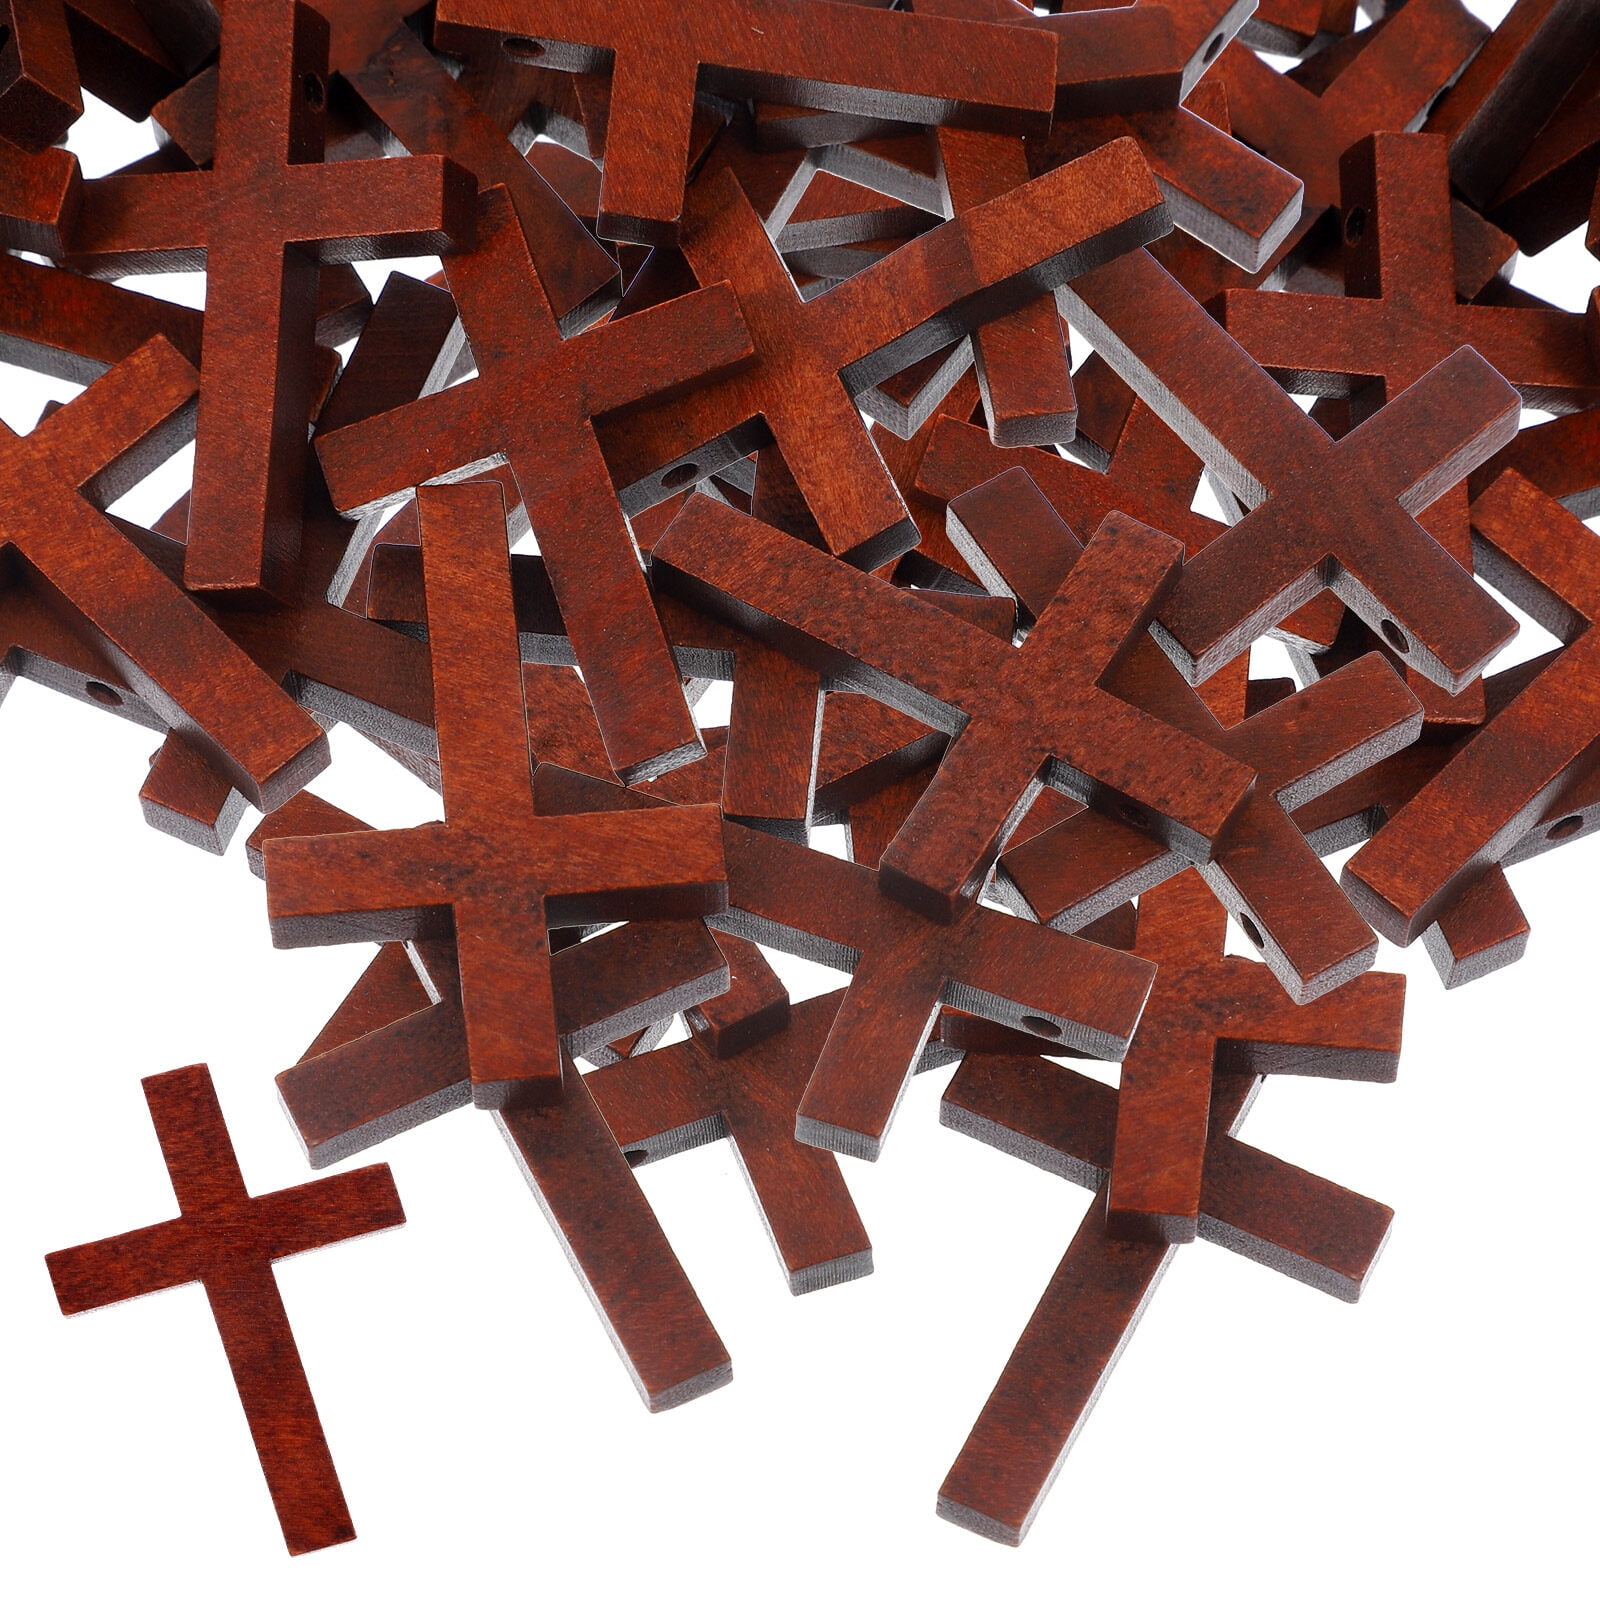 Small Handcrafted Wooden Cross | OramaWorld.com